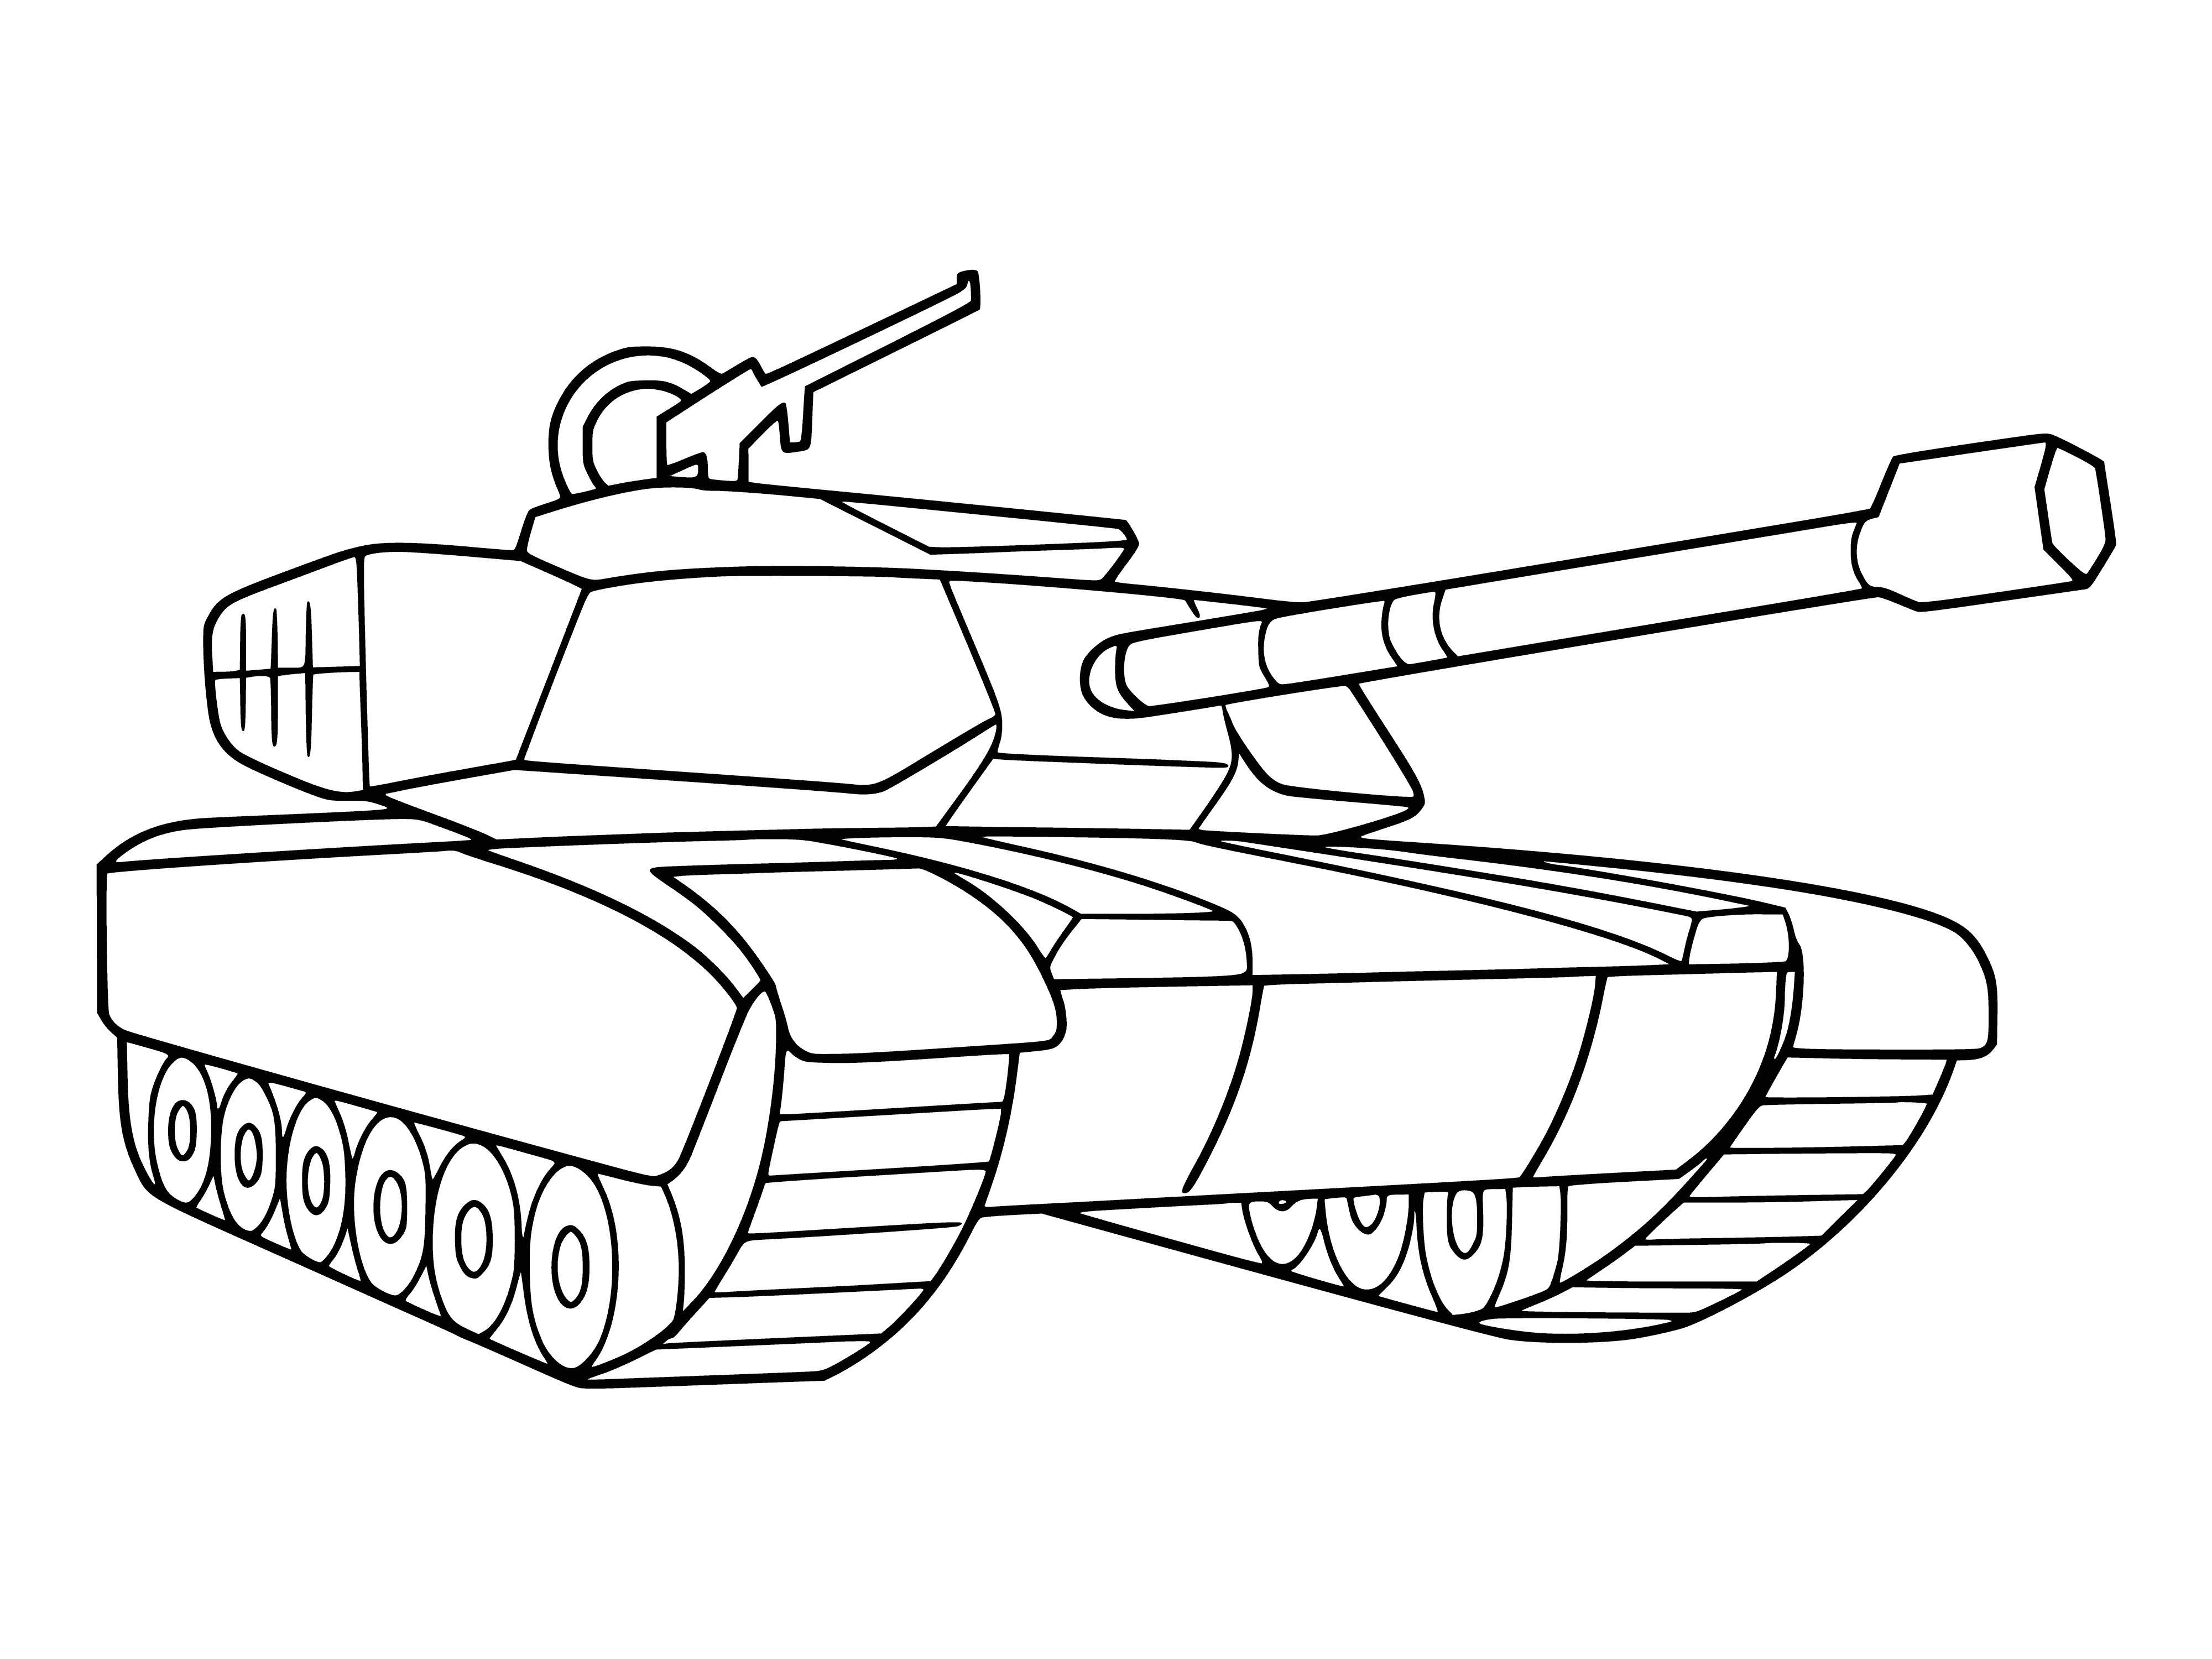 coloring page: Large metal vehicle w/ turret & gun barrel, on tracks.